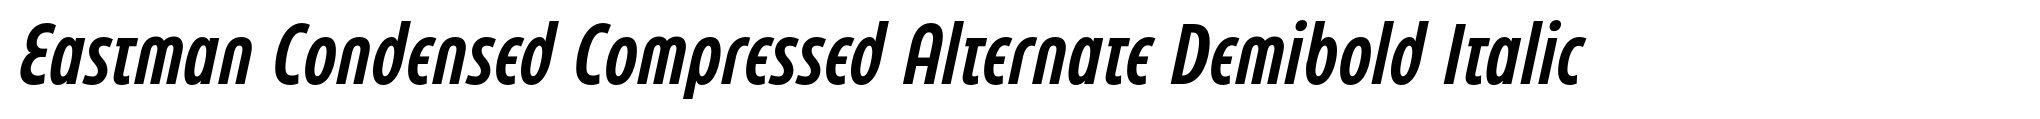 Eastman Condensed Compressed Alternate Demibold Italic image